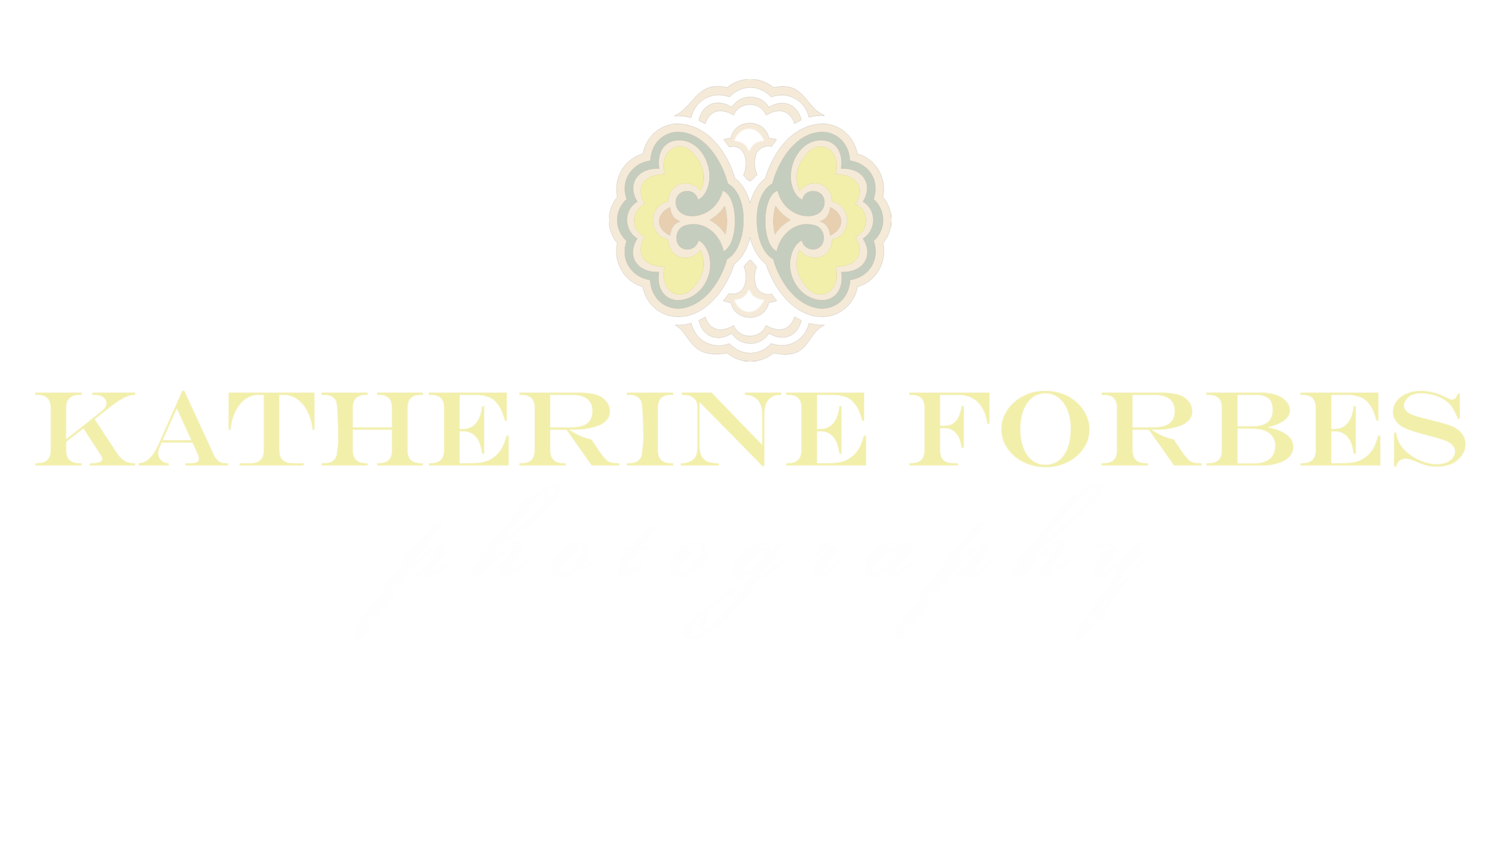 Katherine Forbes Photography